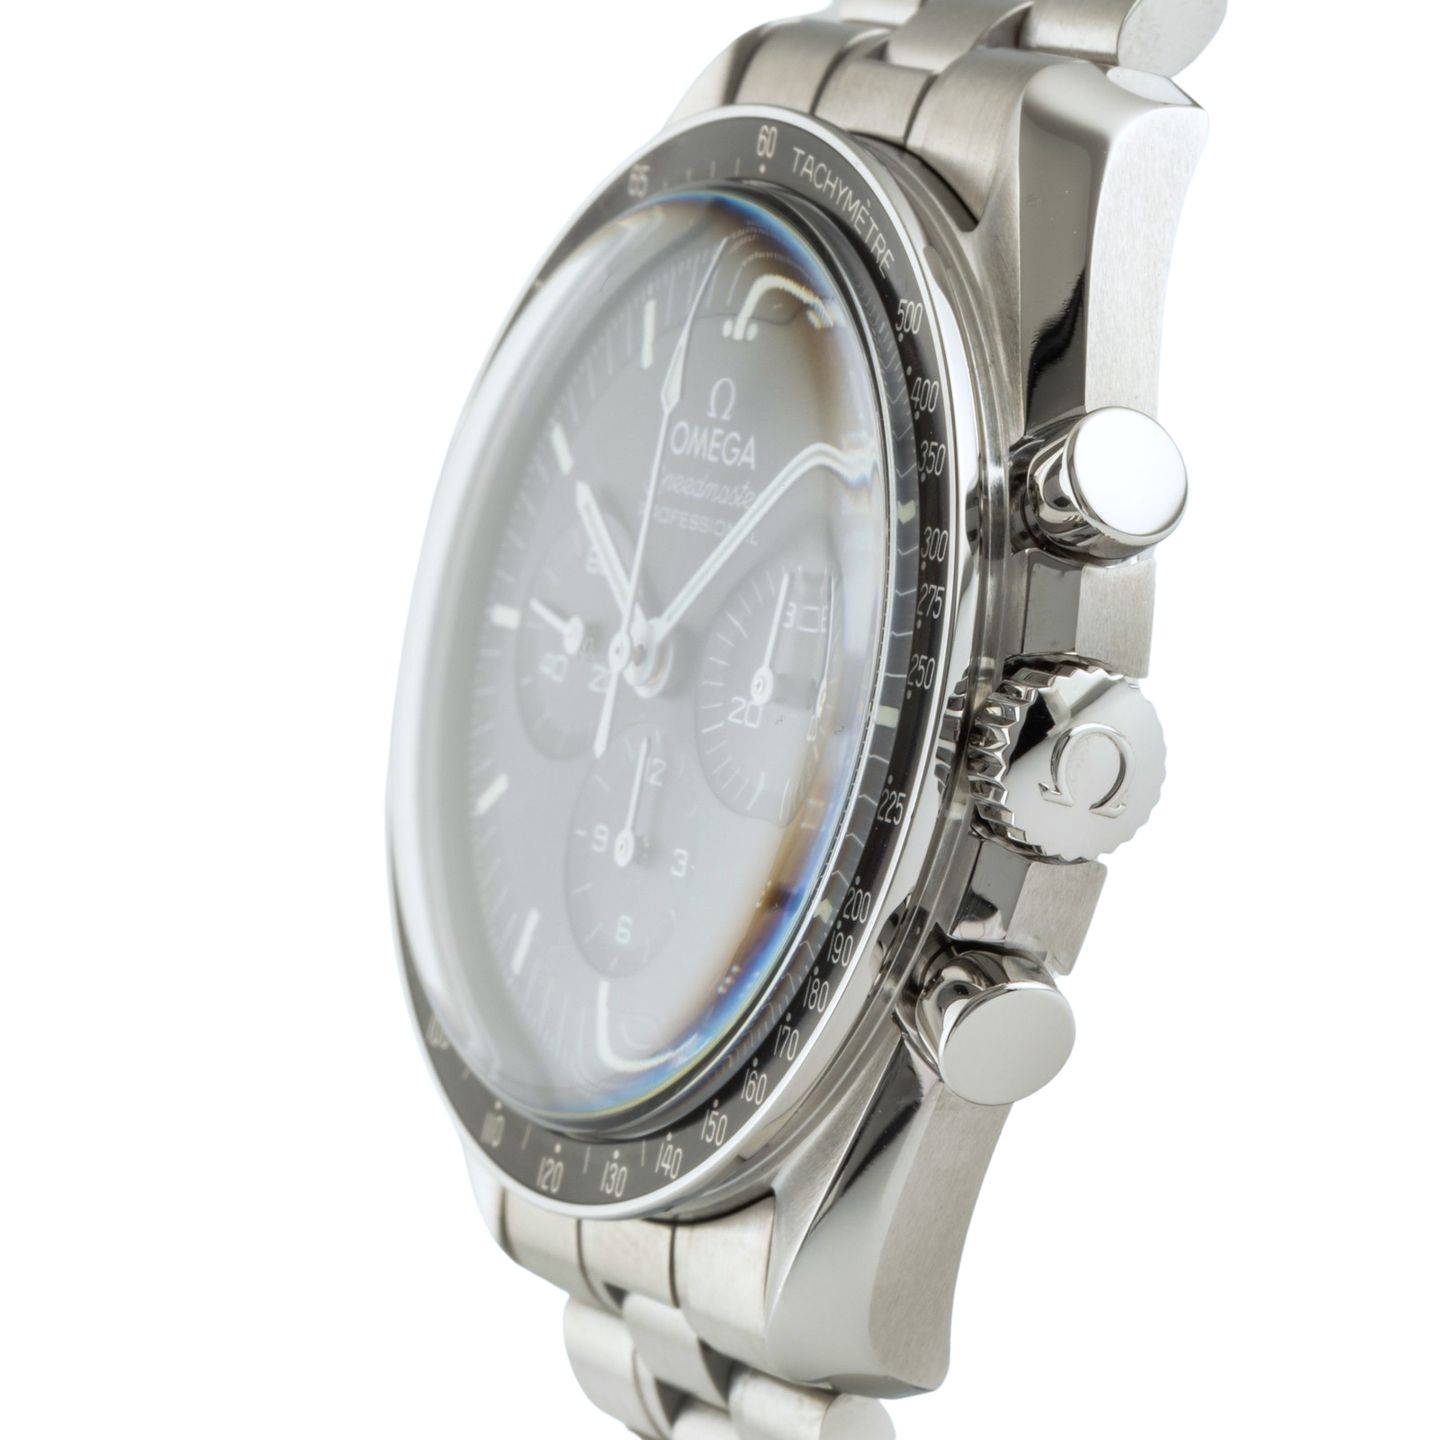 Omega Speedmaster Professional Moonwatch 310.30.42.50.01.001 - (6/8)